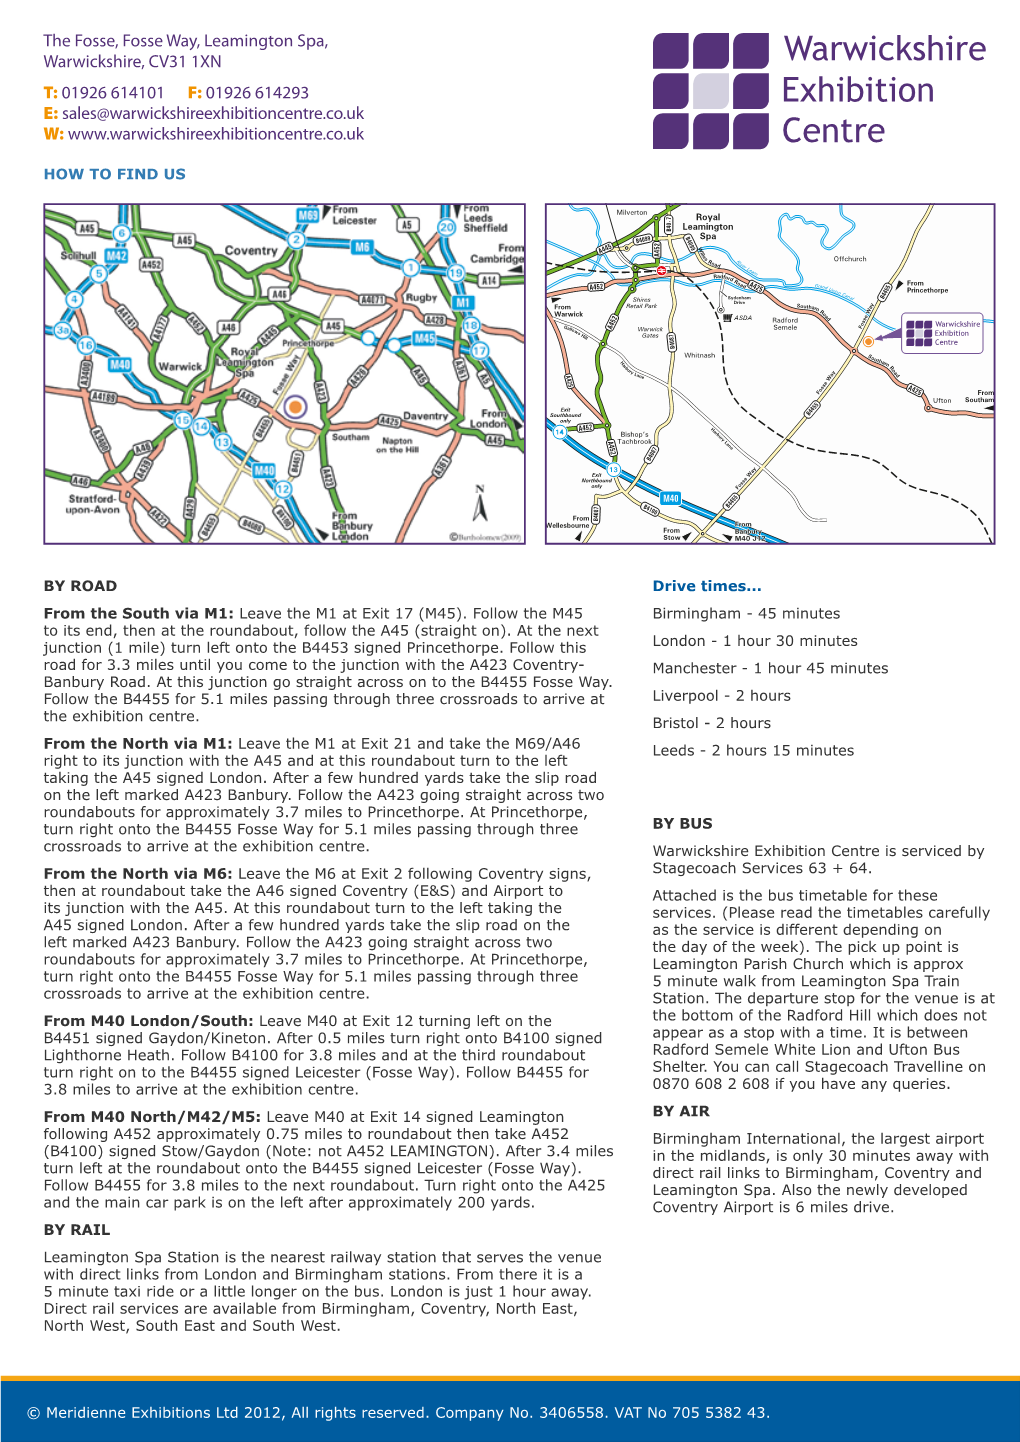 The Fosse, Fosse Way, Leamington Spa, Warwickshire, CV31 1XN T